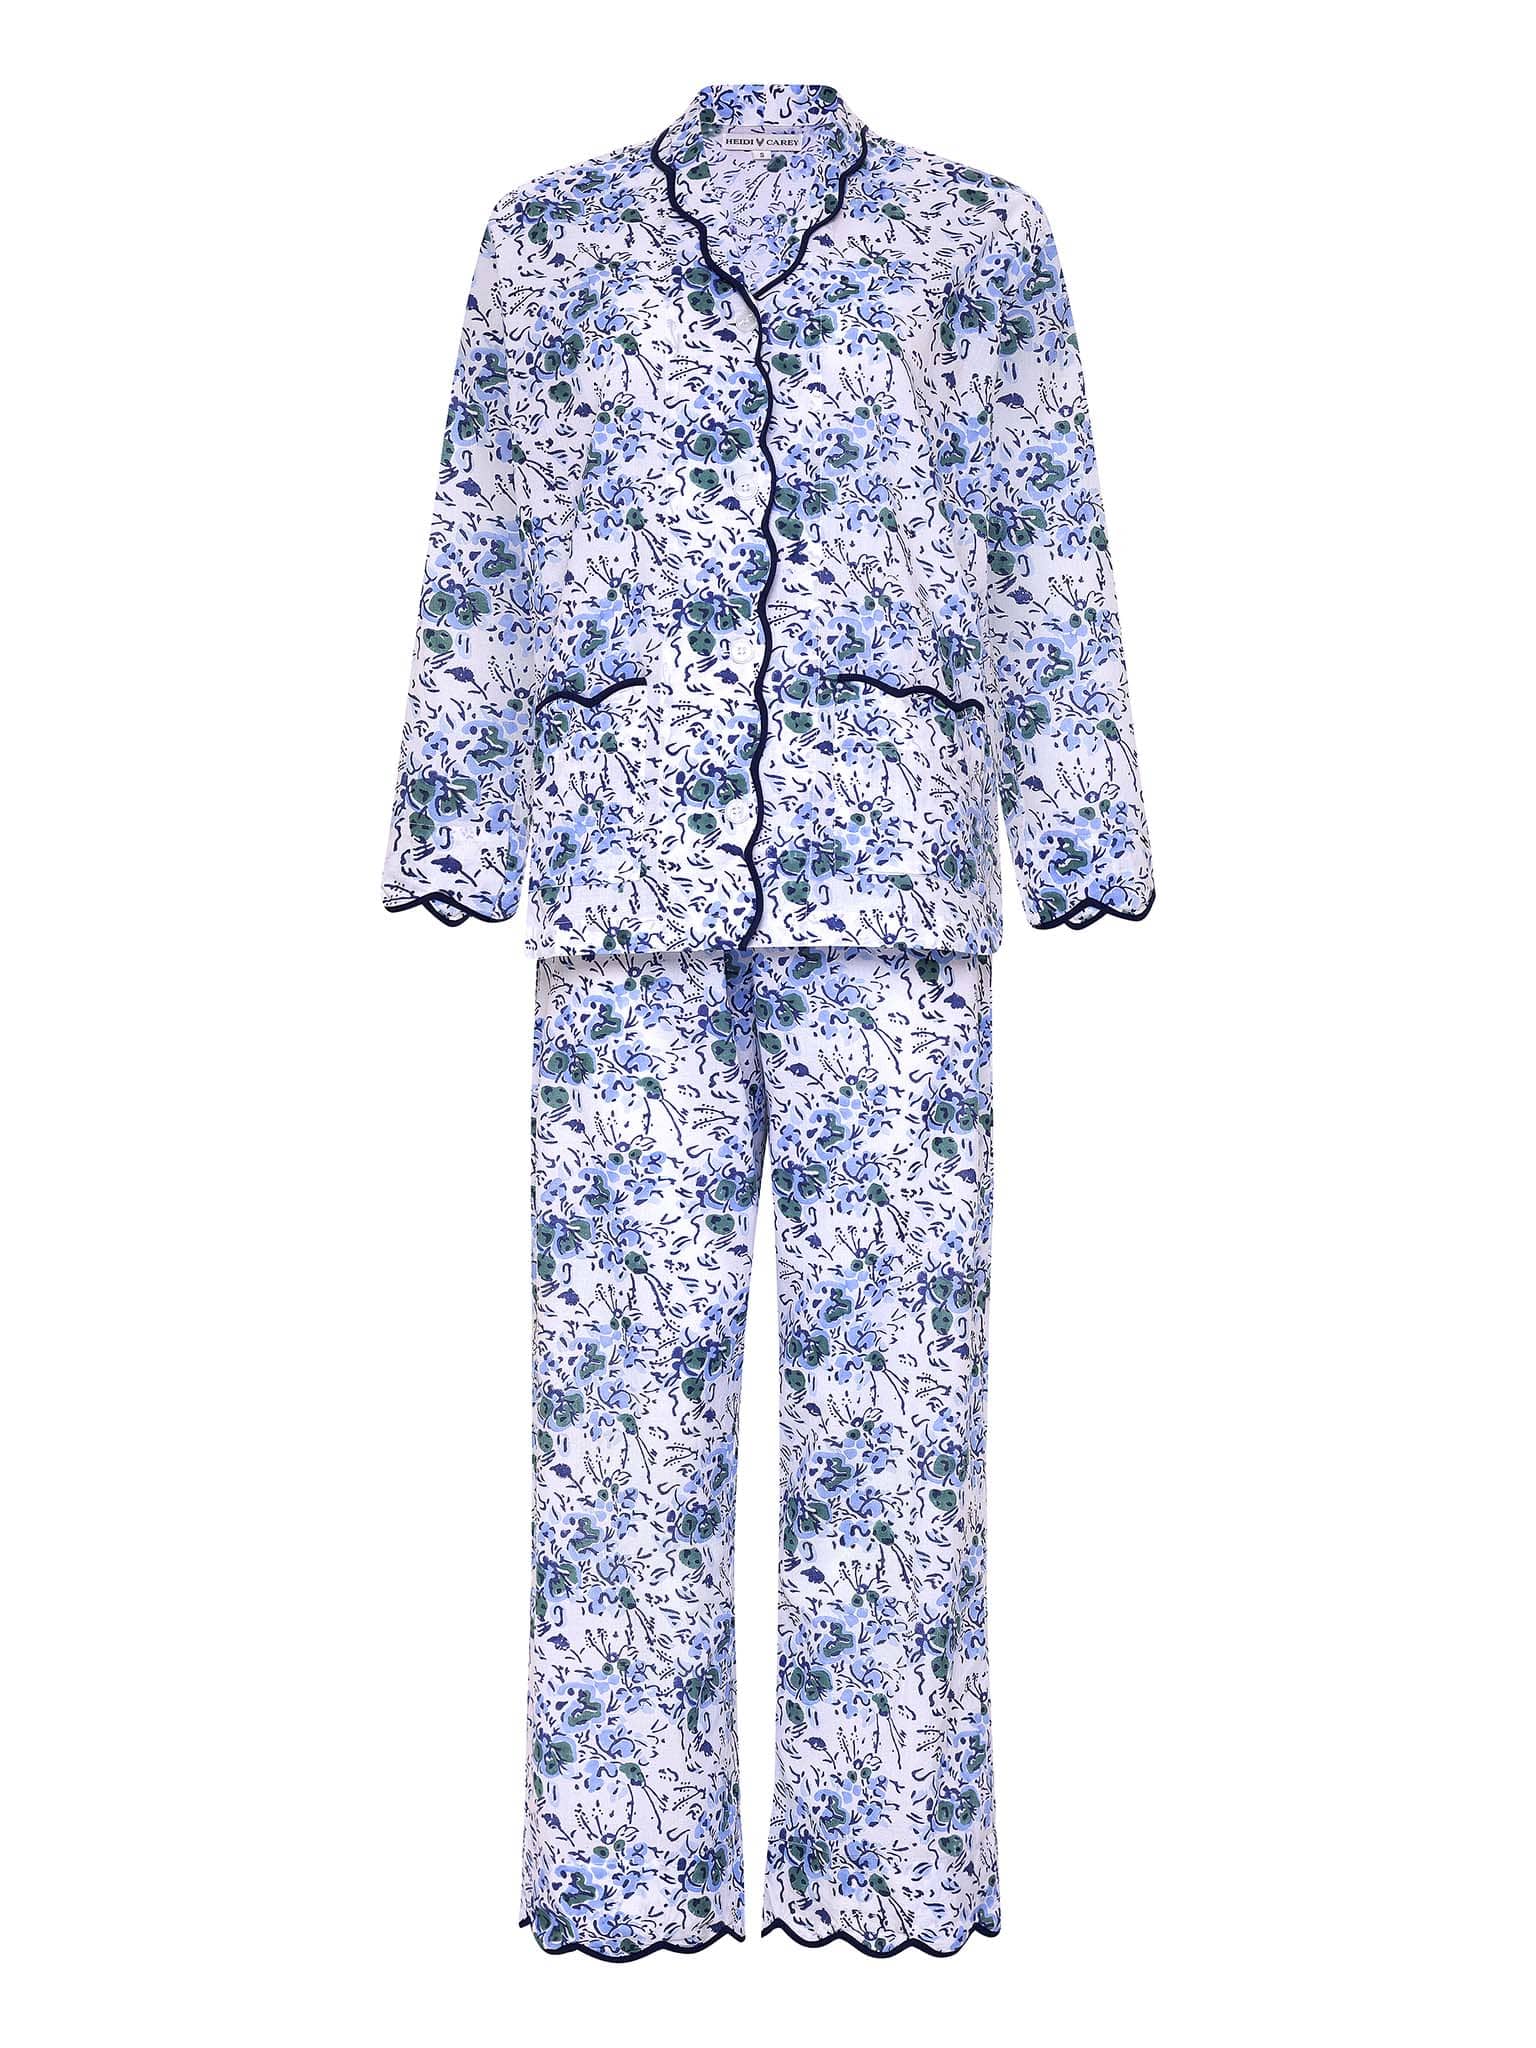 Blue Color Pajama Set 100% Cotton Light Ultra-soft Night Dress Women Cotton  Pants Shirt Set With Shorts Set Handmade Floral Print 